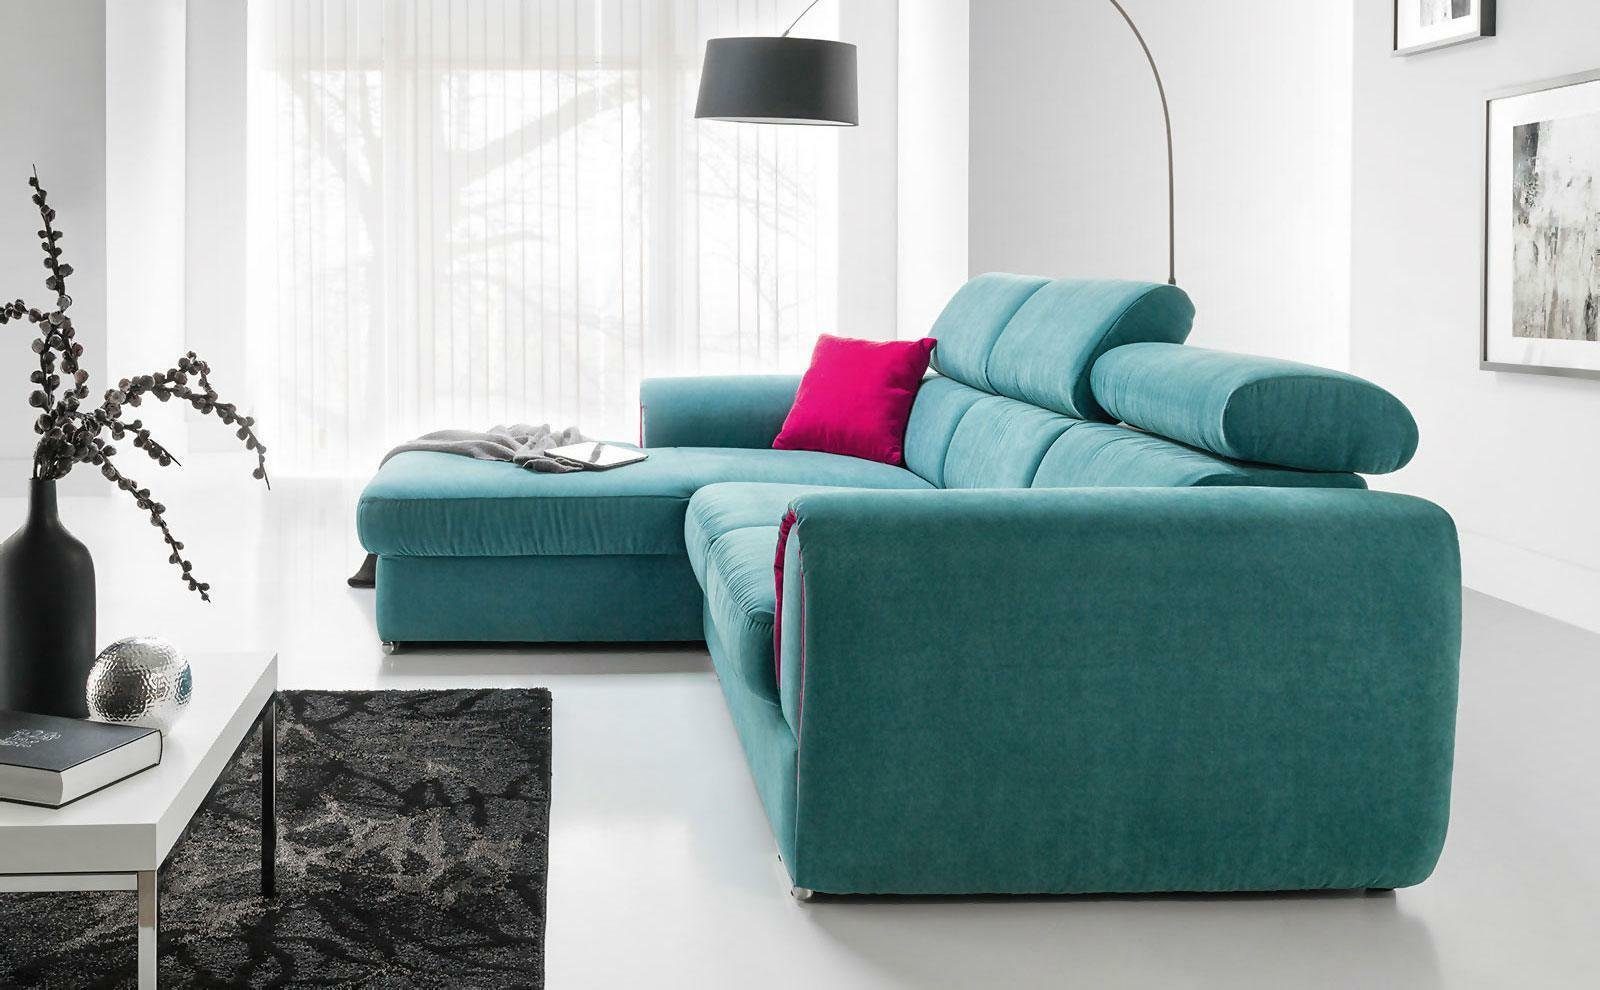 JVmoebel Ecksofa Modernes Türkis Made Sofa Polster Sofas Couch Europe in Ecksofa Neu, Wohnlandschaft